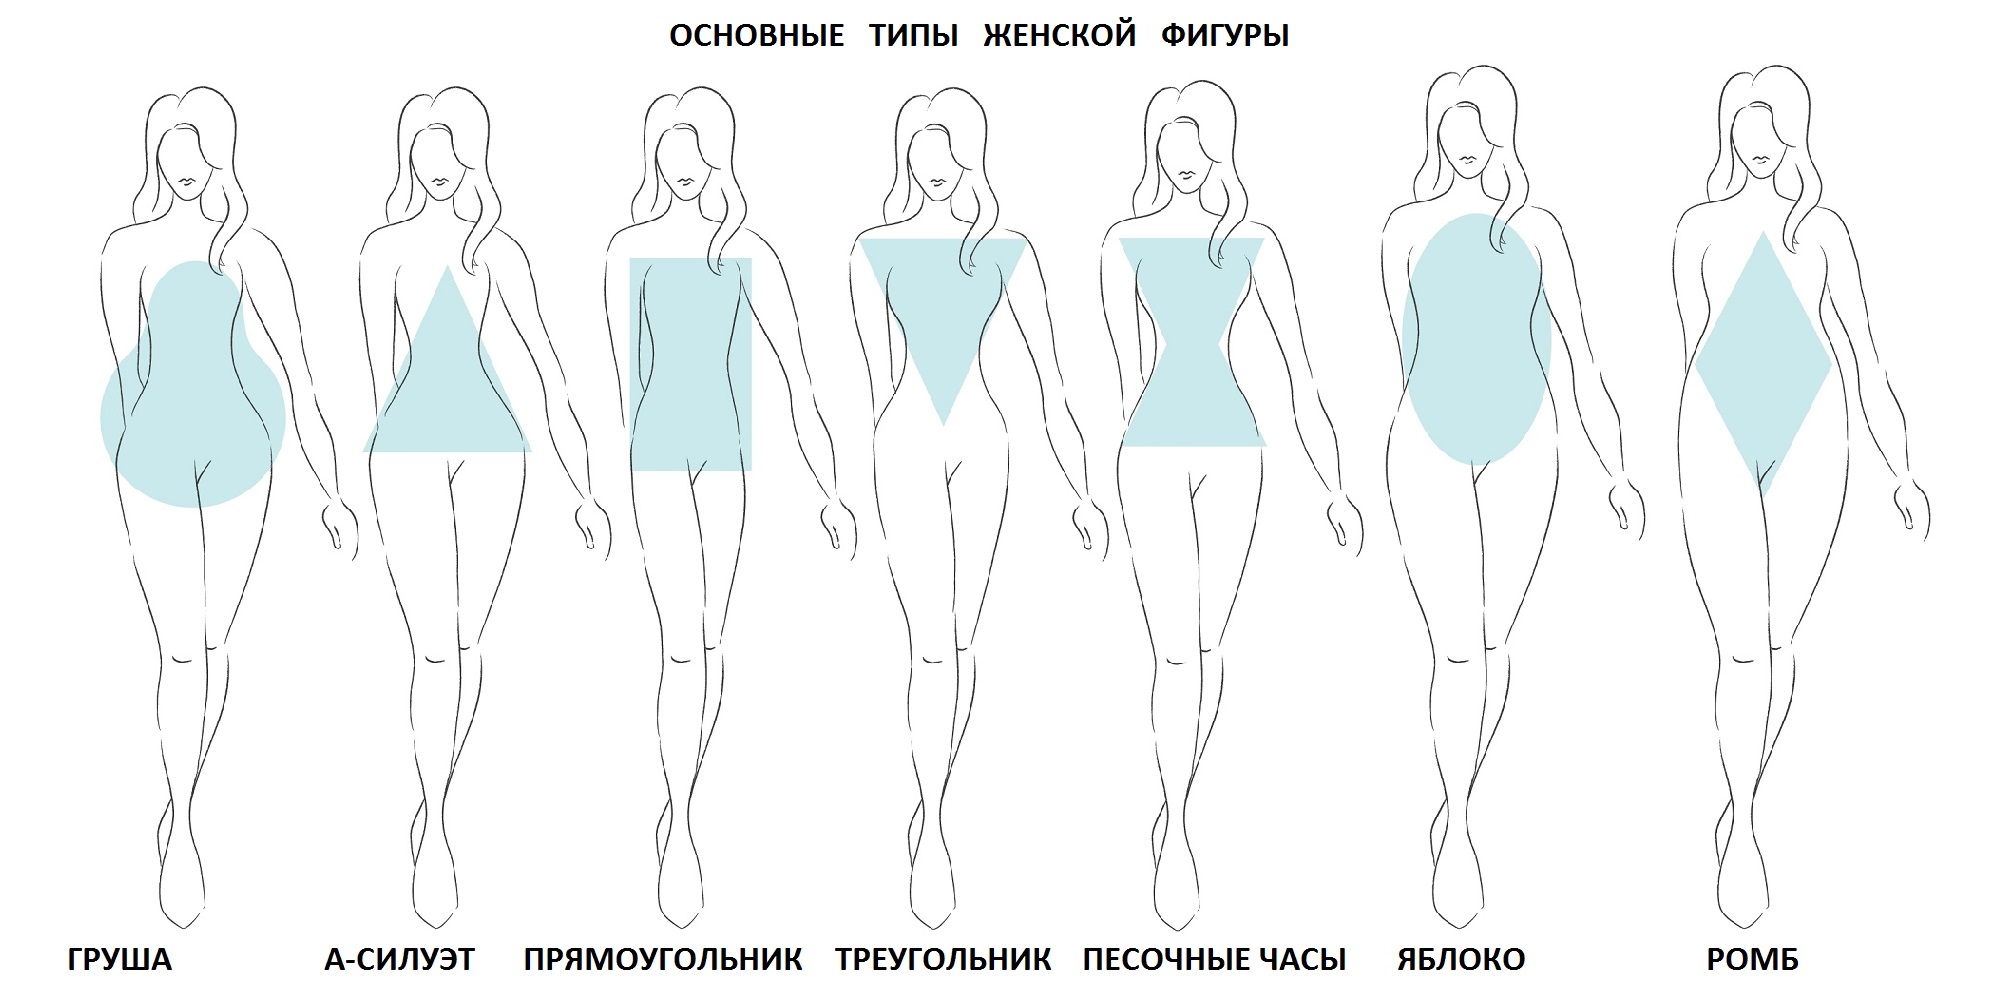 Виды u. Типы телосложения женских фигур. Какие типы фигур бывают у женщин. Как определить Тип телосложения у женщин. Телосложение женщины рисунок типы.